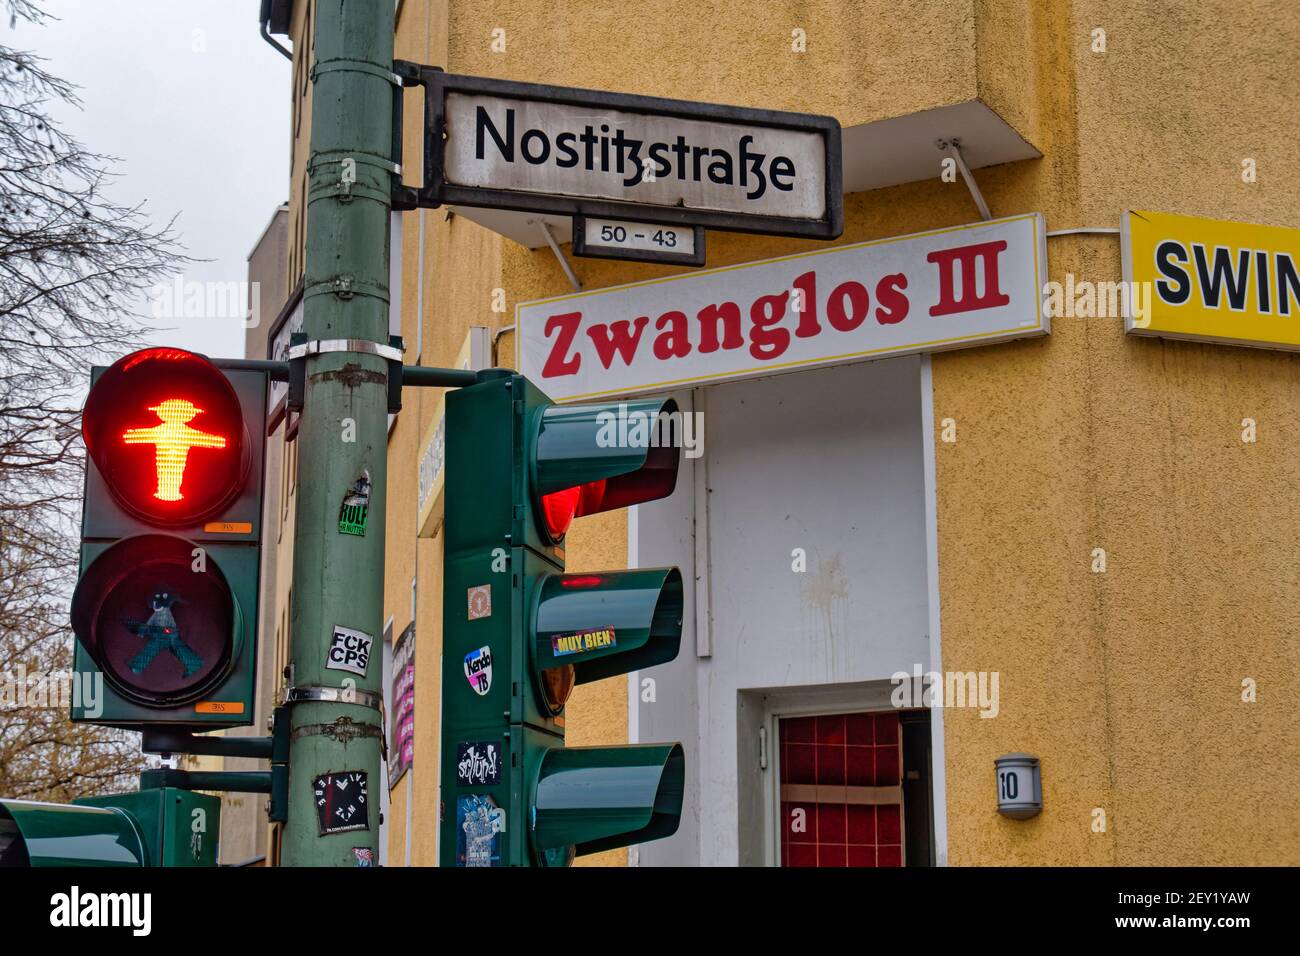 Swinger Club Zwanglos III , geschlossen im Corona Lockdown, Kreuzberg, rote Ampel, Symbolbild, Berlin Stock Photo